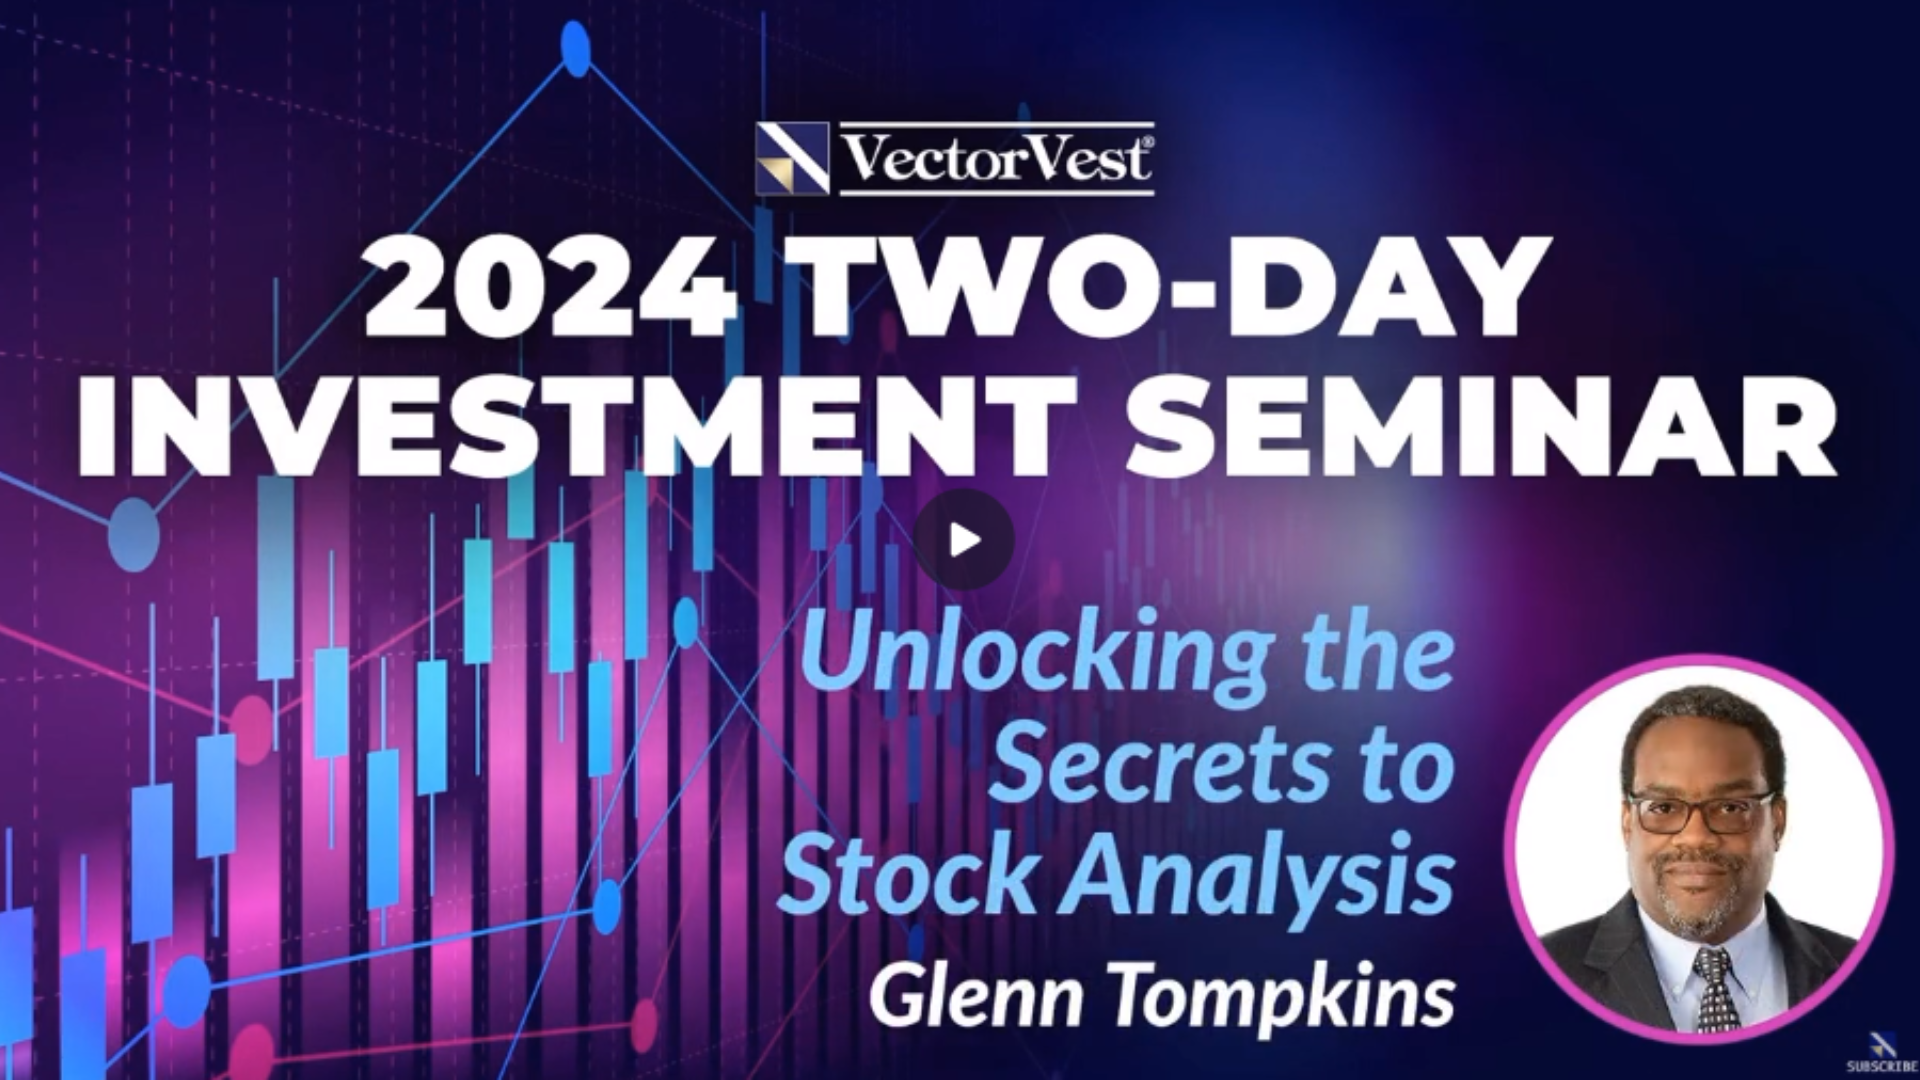  Unlocking the Secrets to Stock Analysis with Glenn Tompkins  